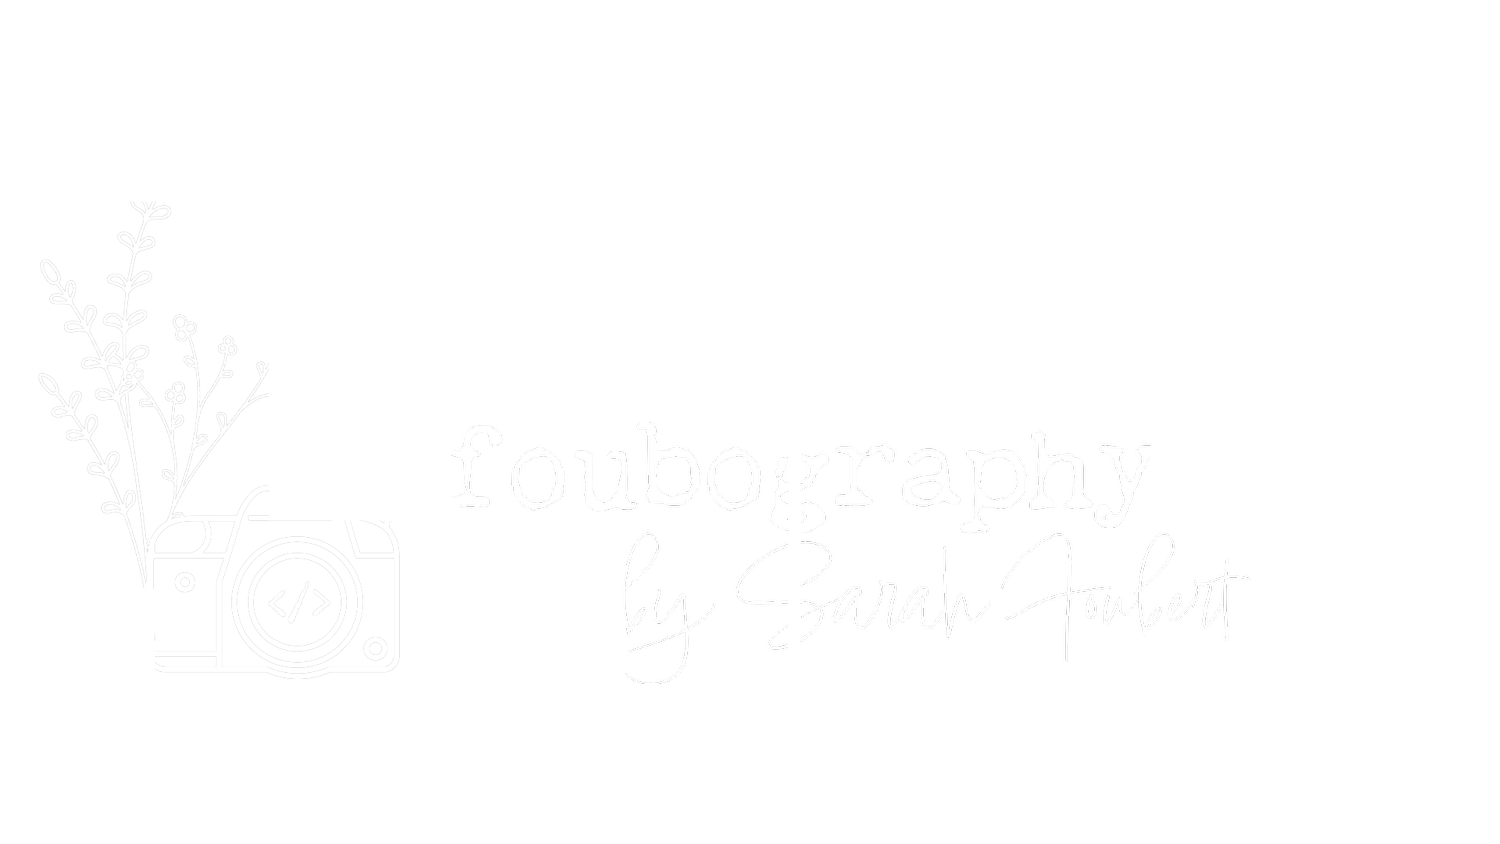 foubography